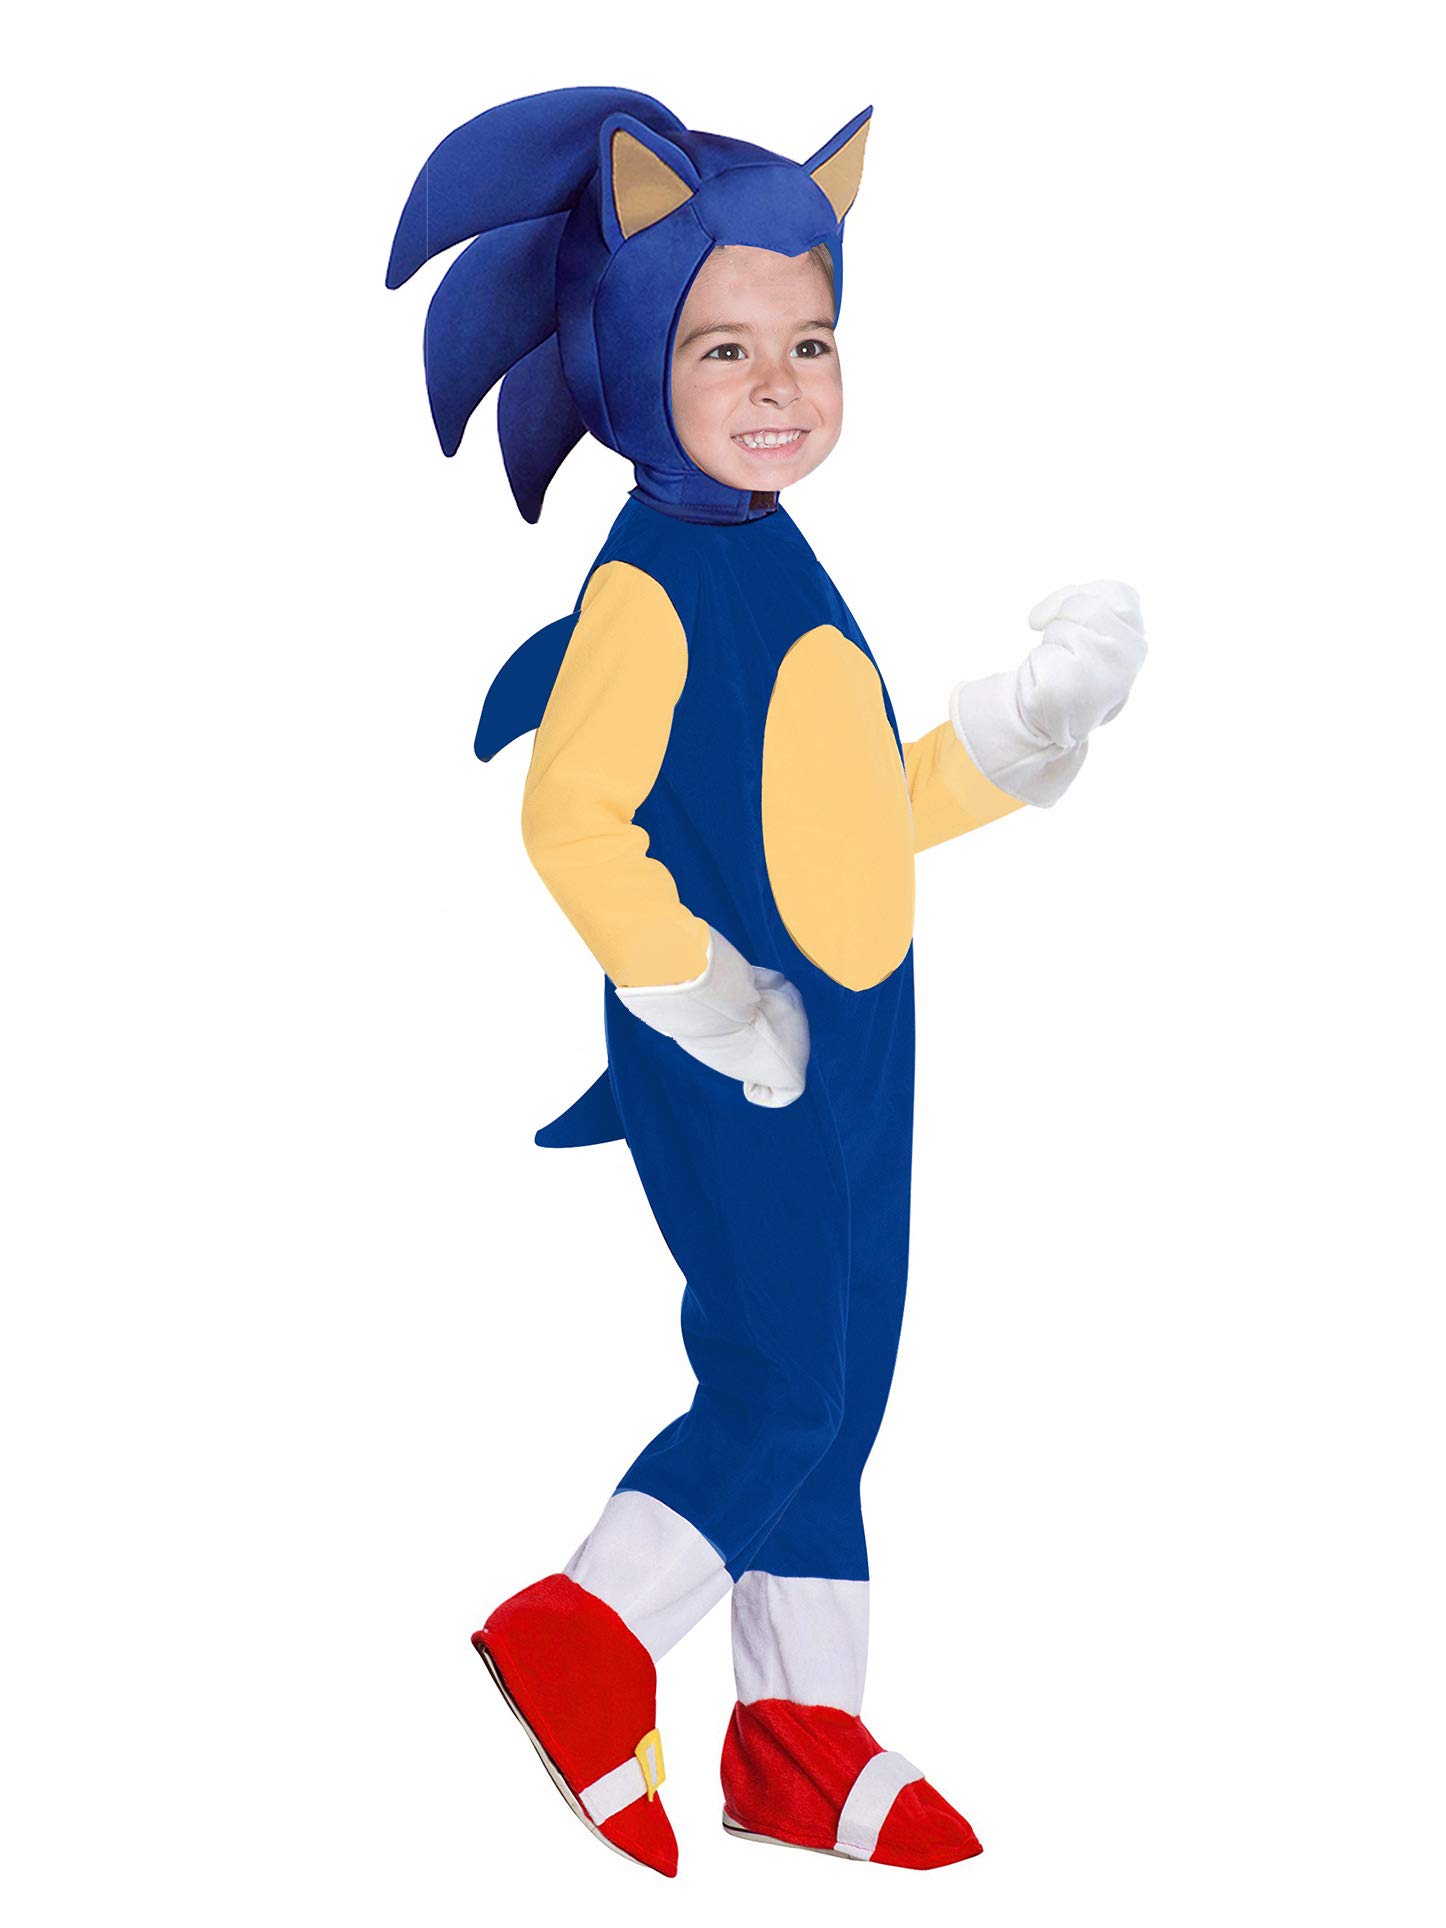 Kids Pretend Play Costumes Cartoon Hedgehog Jumpsuit Bodysuit With Gloves Headpiece